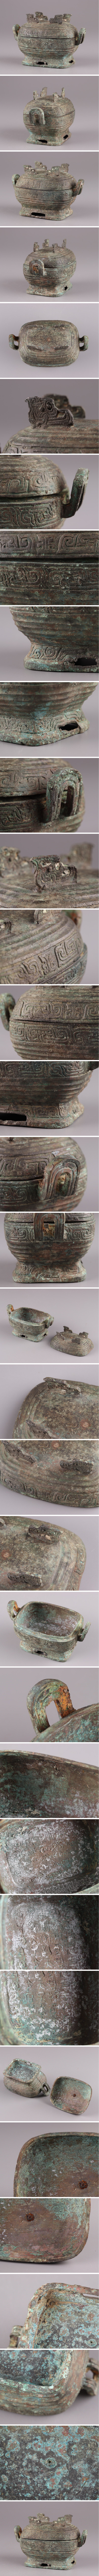 セール在庫中国古玩 唐物 西周期 青銅器 発掘 饕餮紋 香炉 古作 時代物 極上品 初だし品 3662 その他